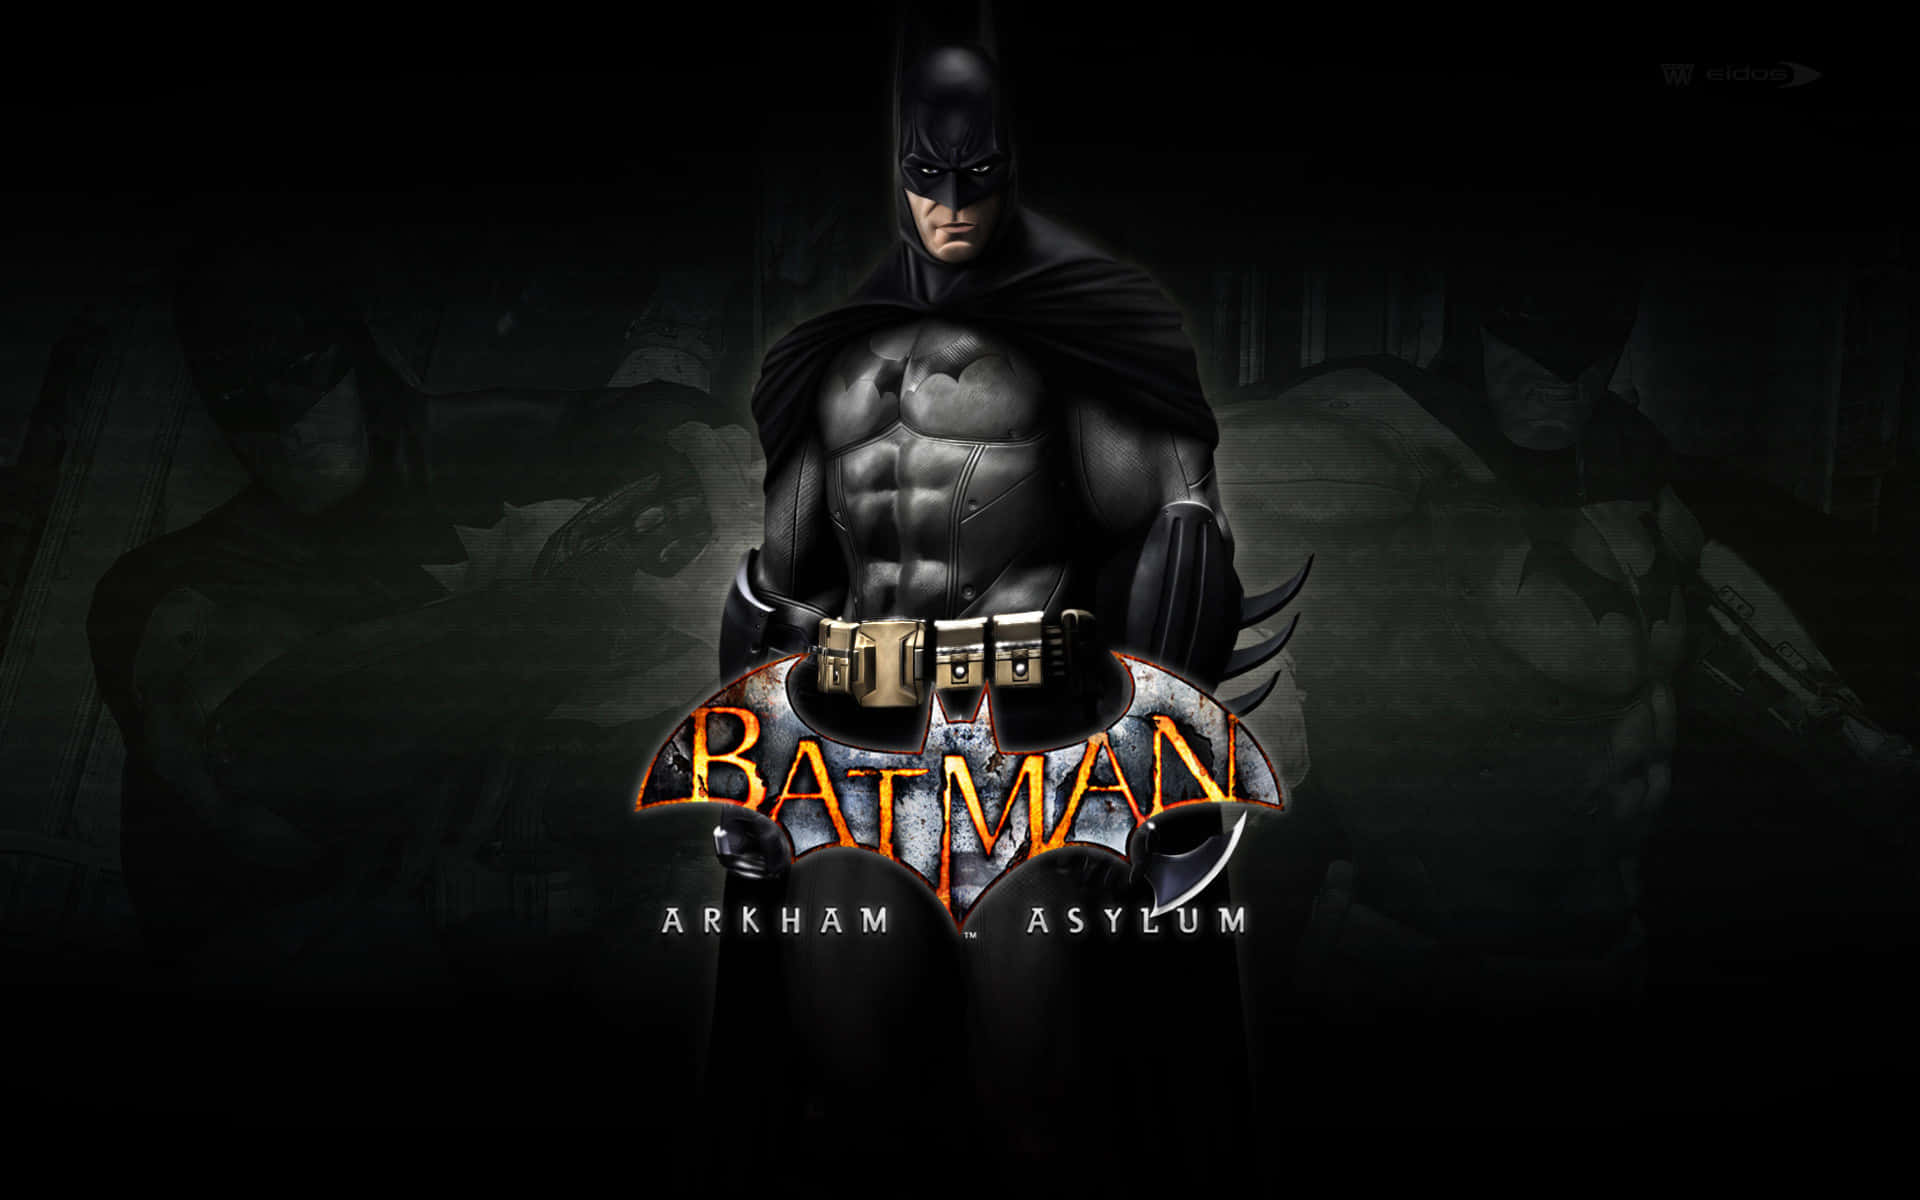 Batmanist Im Arkham Asylum Eingesperrt. Wallpaper